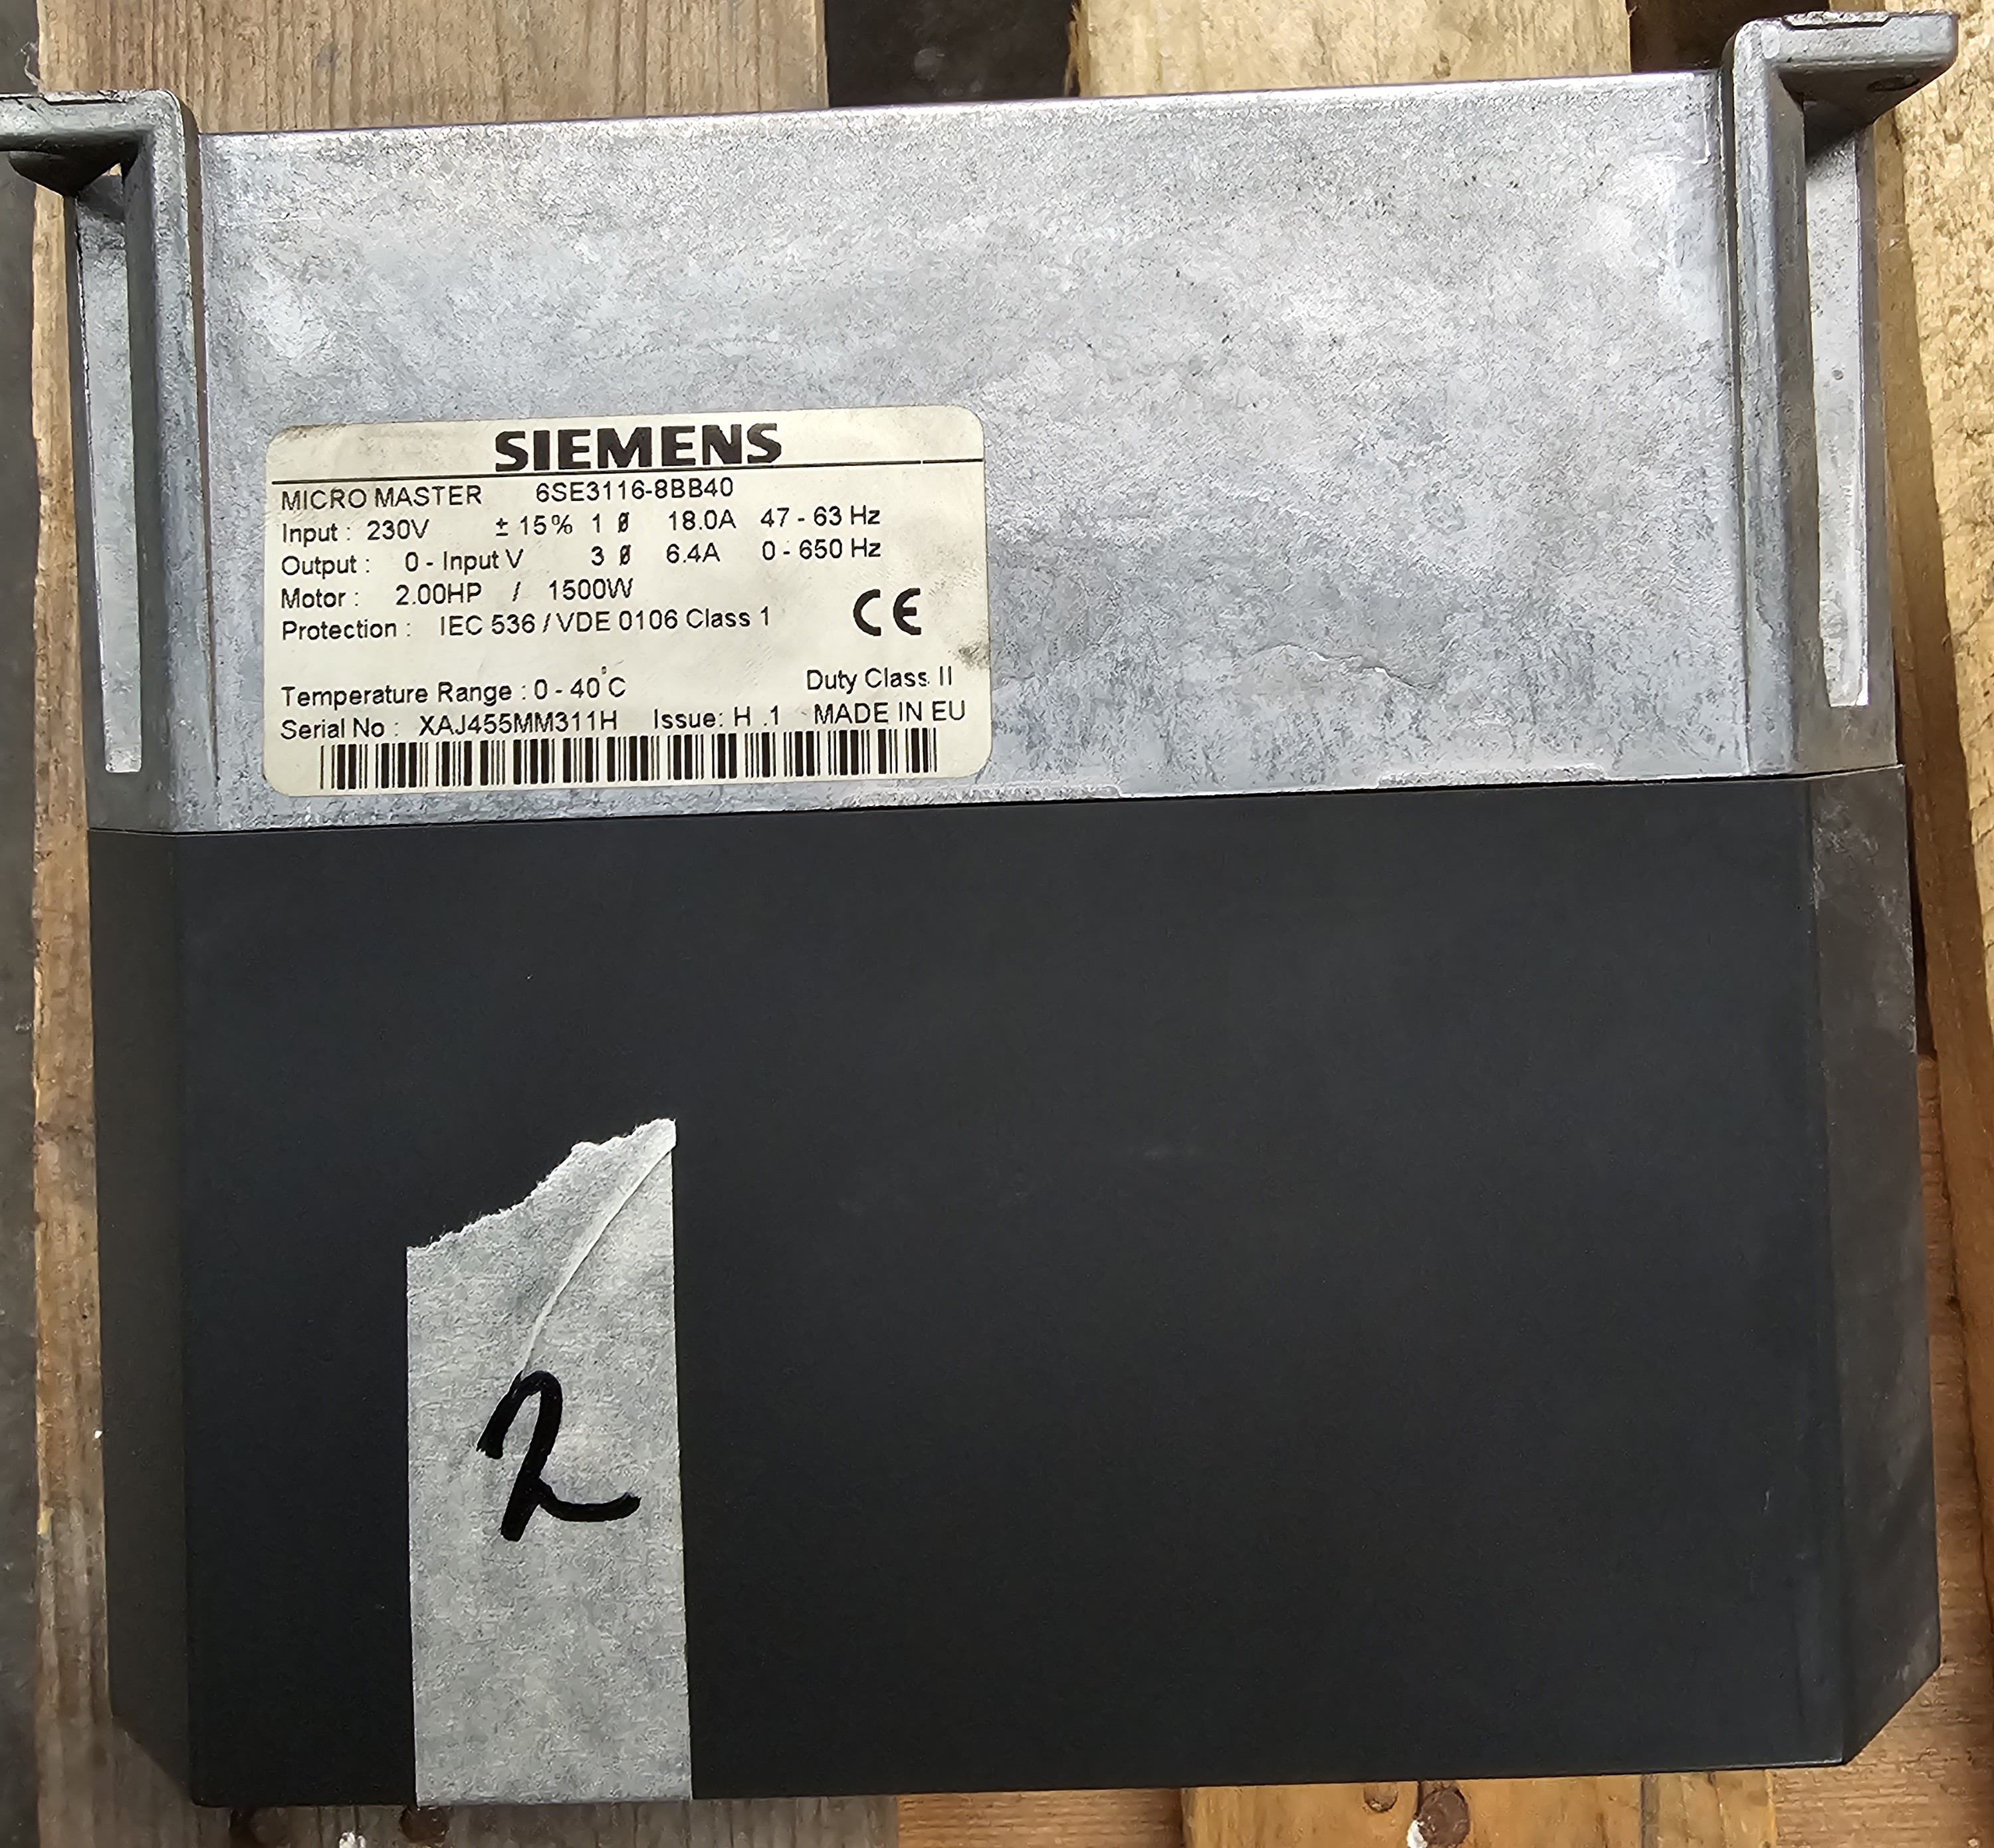 OND-136 Siemens Micro Master